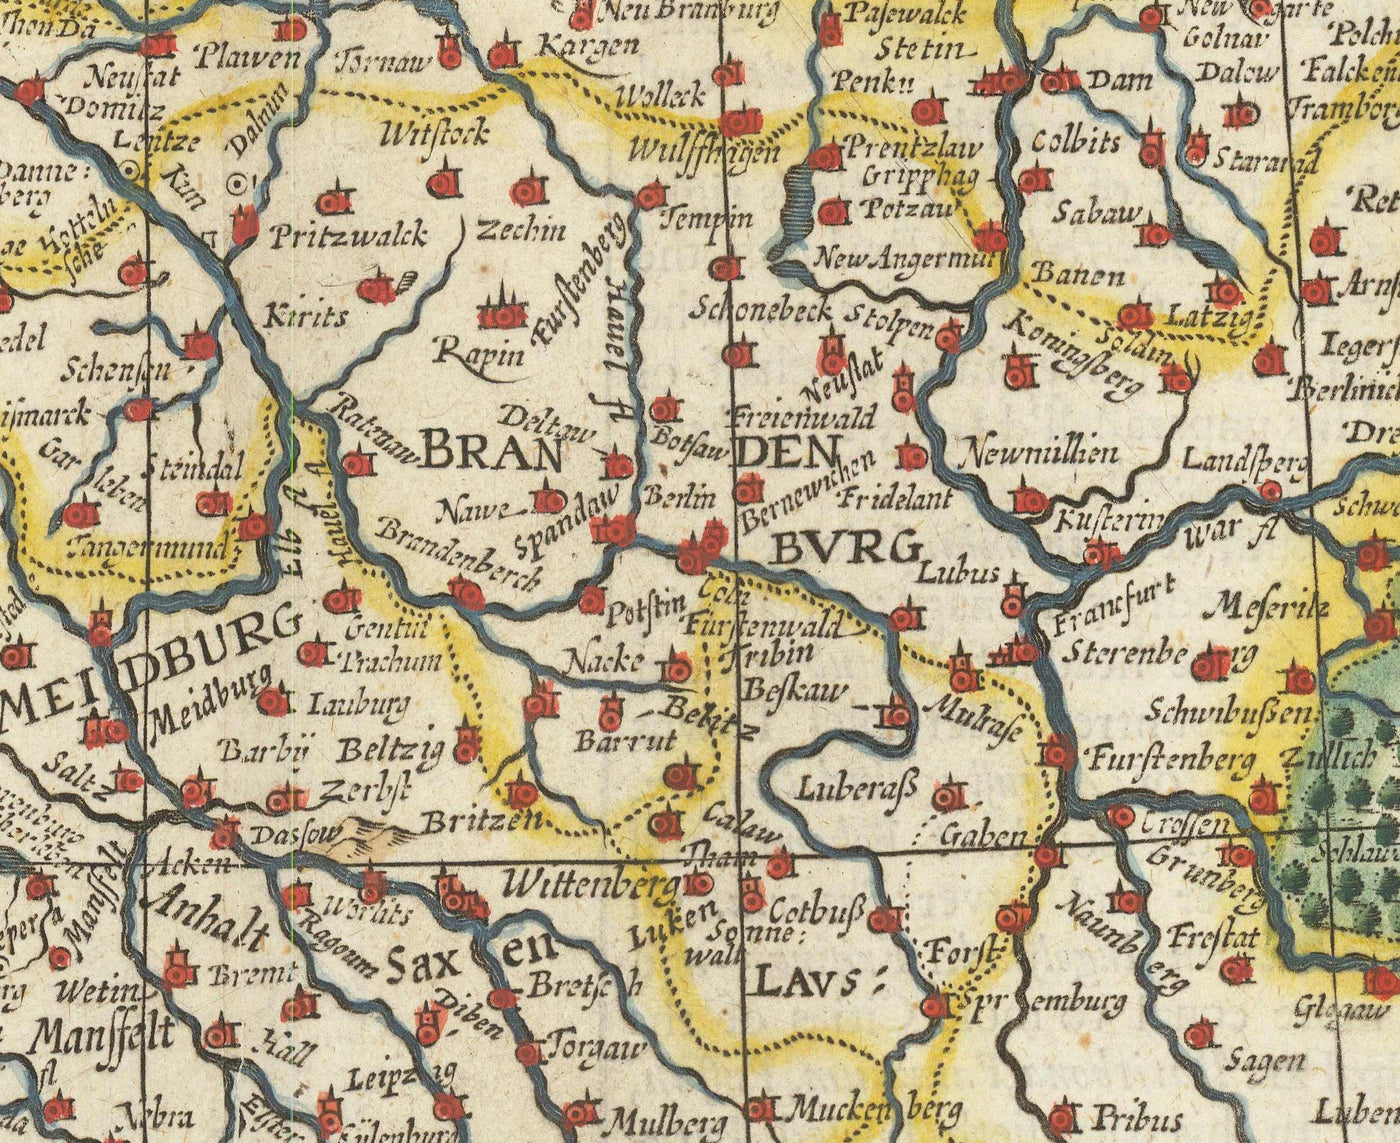 Old Map of Germany by John Speed, 1627 - Holy Roman Empire, German Empire - Austria, Czechia, Poland, Switzerland